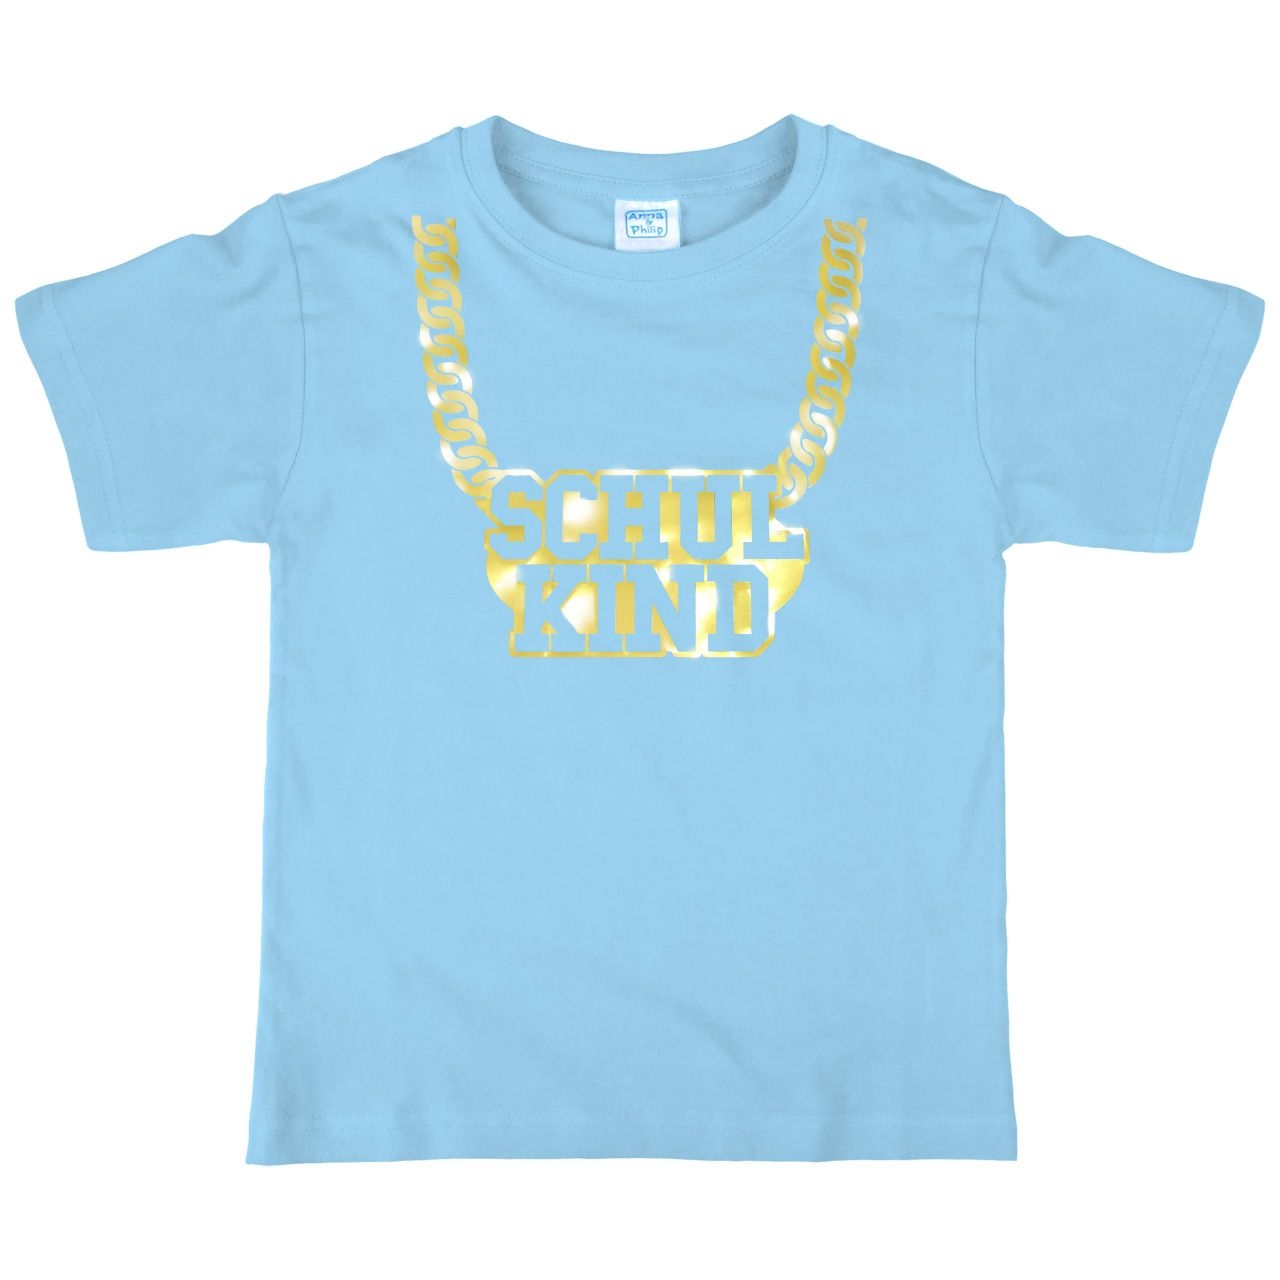 Schulkind Goldkette Kinder T-Shirt hellblau 110 / 116